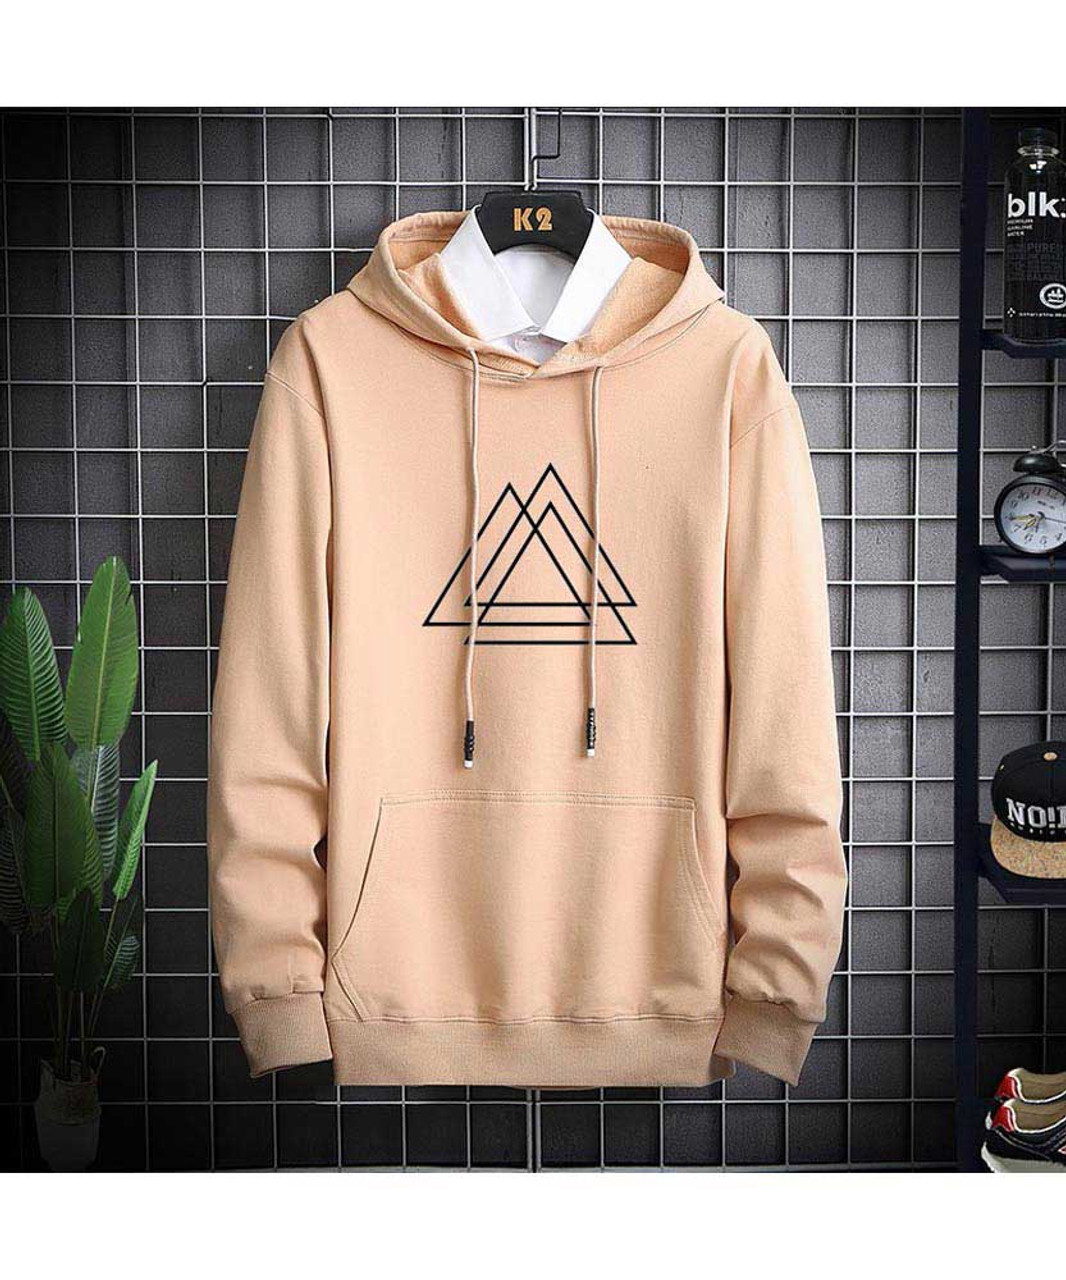 Khaki triple triangle pattern print pull over hoodies | Mens hoodies ...